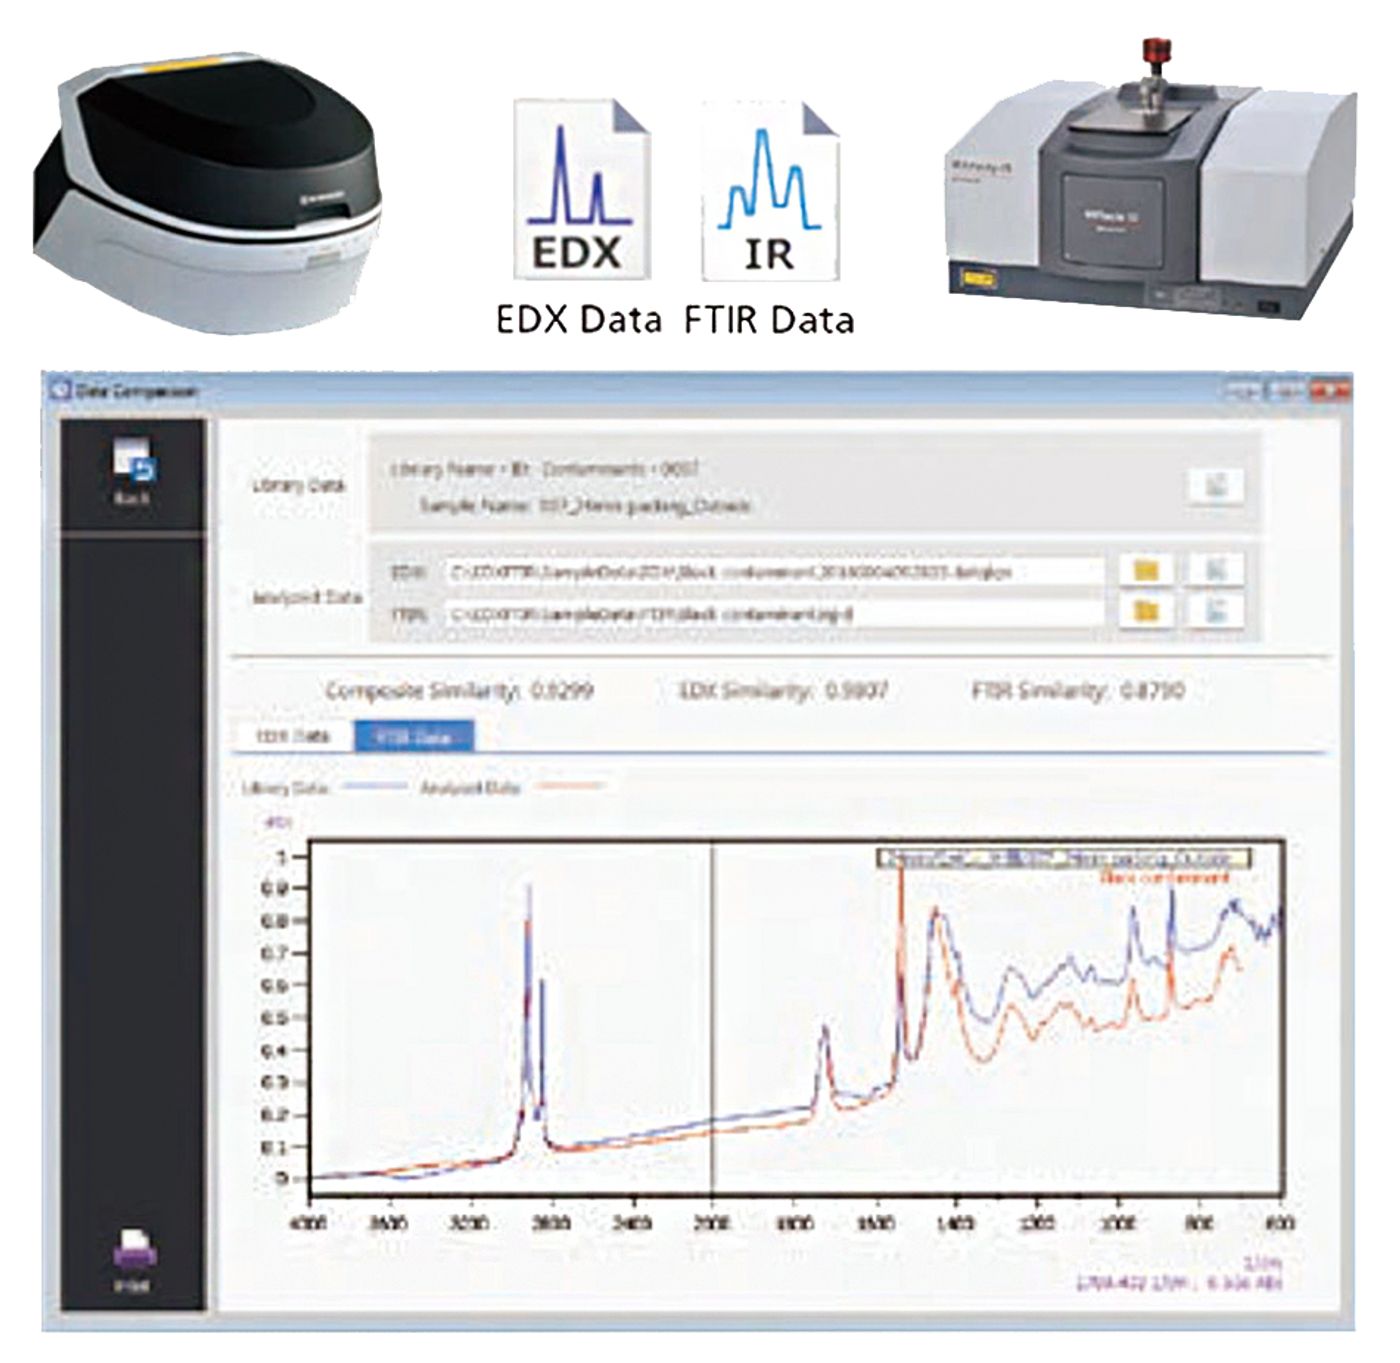 Nuevo software para análisis integrado EDX-IR